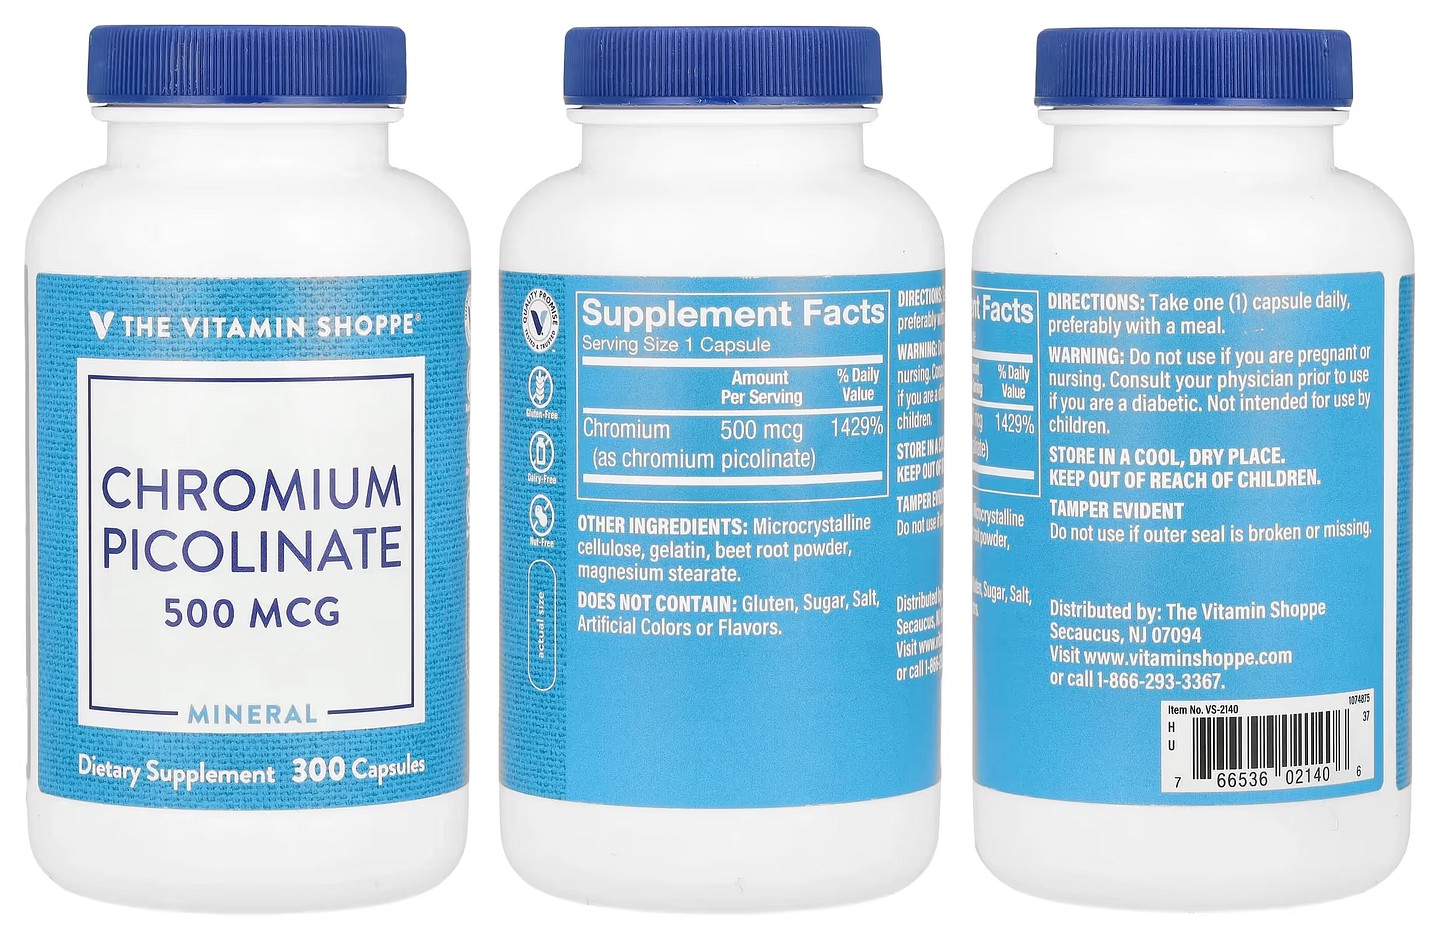 The Vitamin Shoppe, Chromium Picolinate packaging